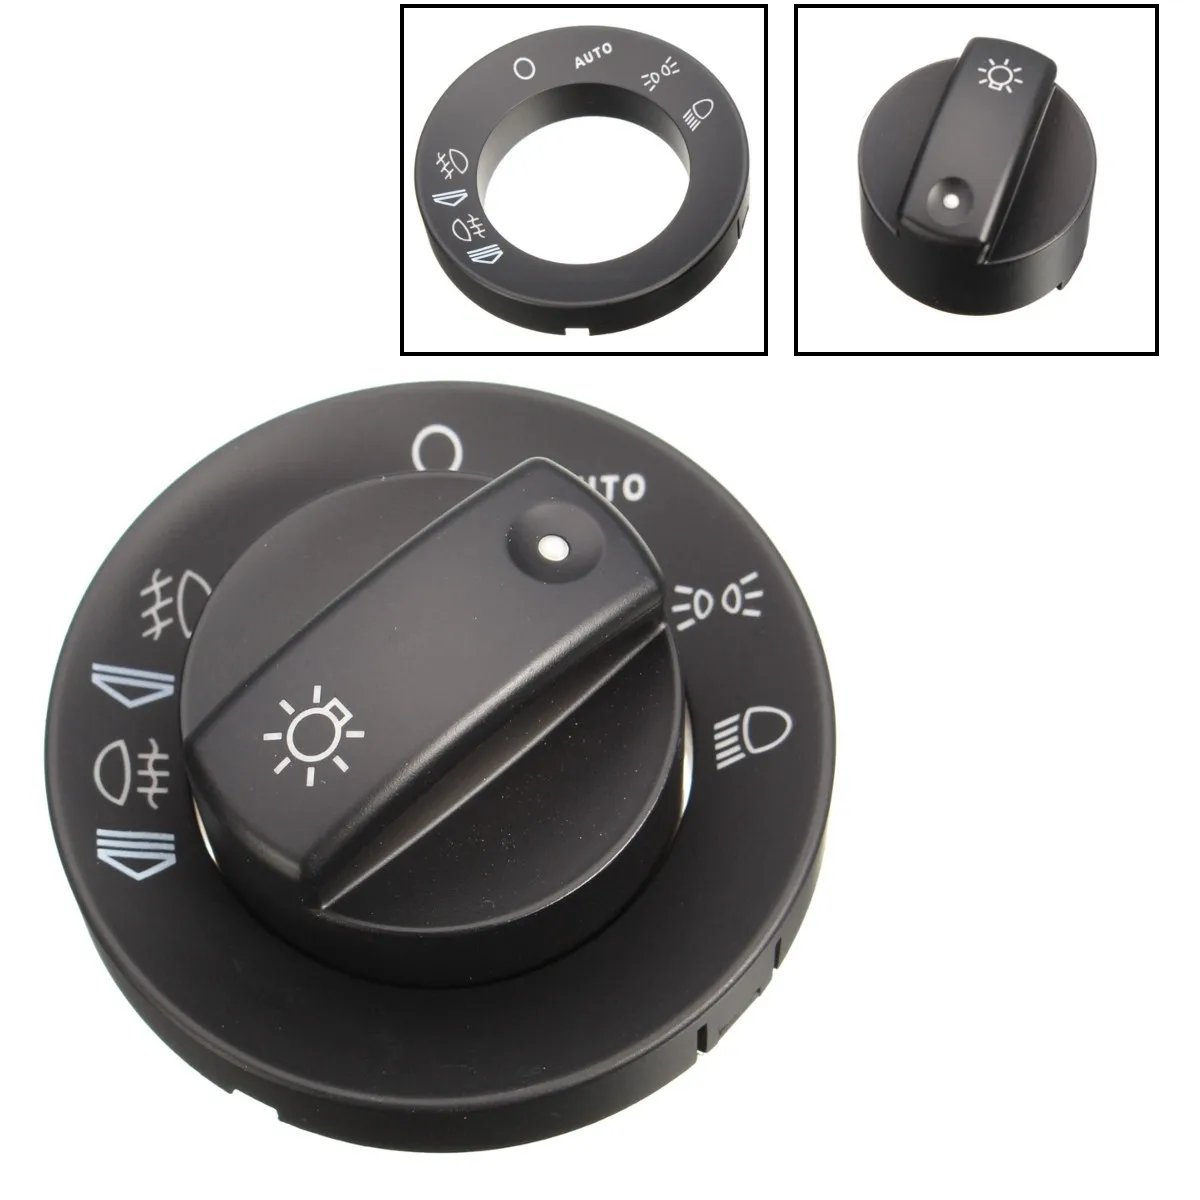 

W / Auto Headlight Fog Light Control Switch Cover Cap Repair Kit For 8E0941531B AUDI A4 S4 8E B6 B7 2000 2001 2002 2003 - 2007